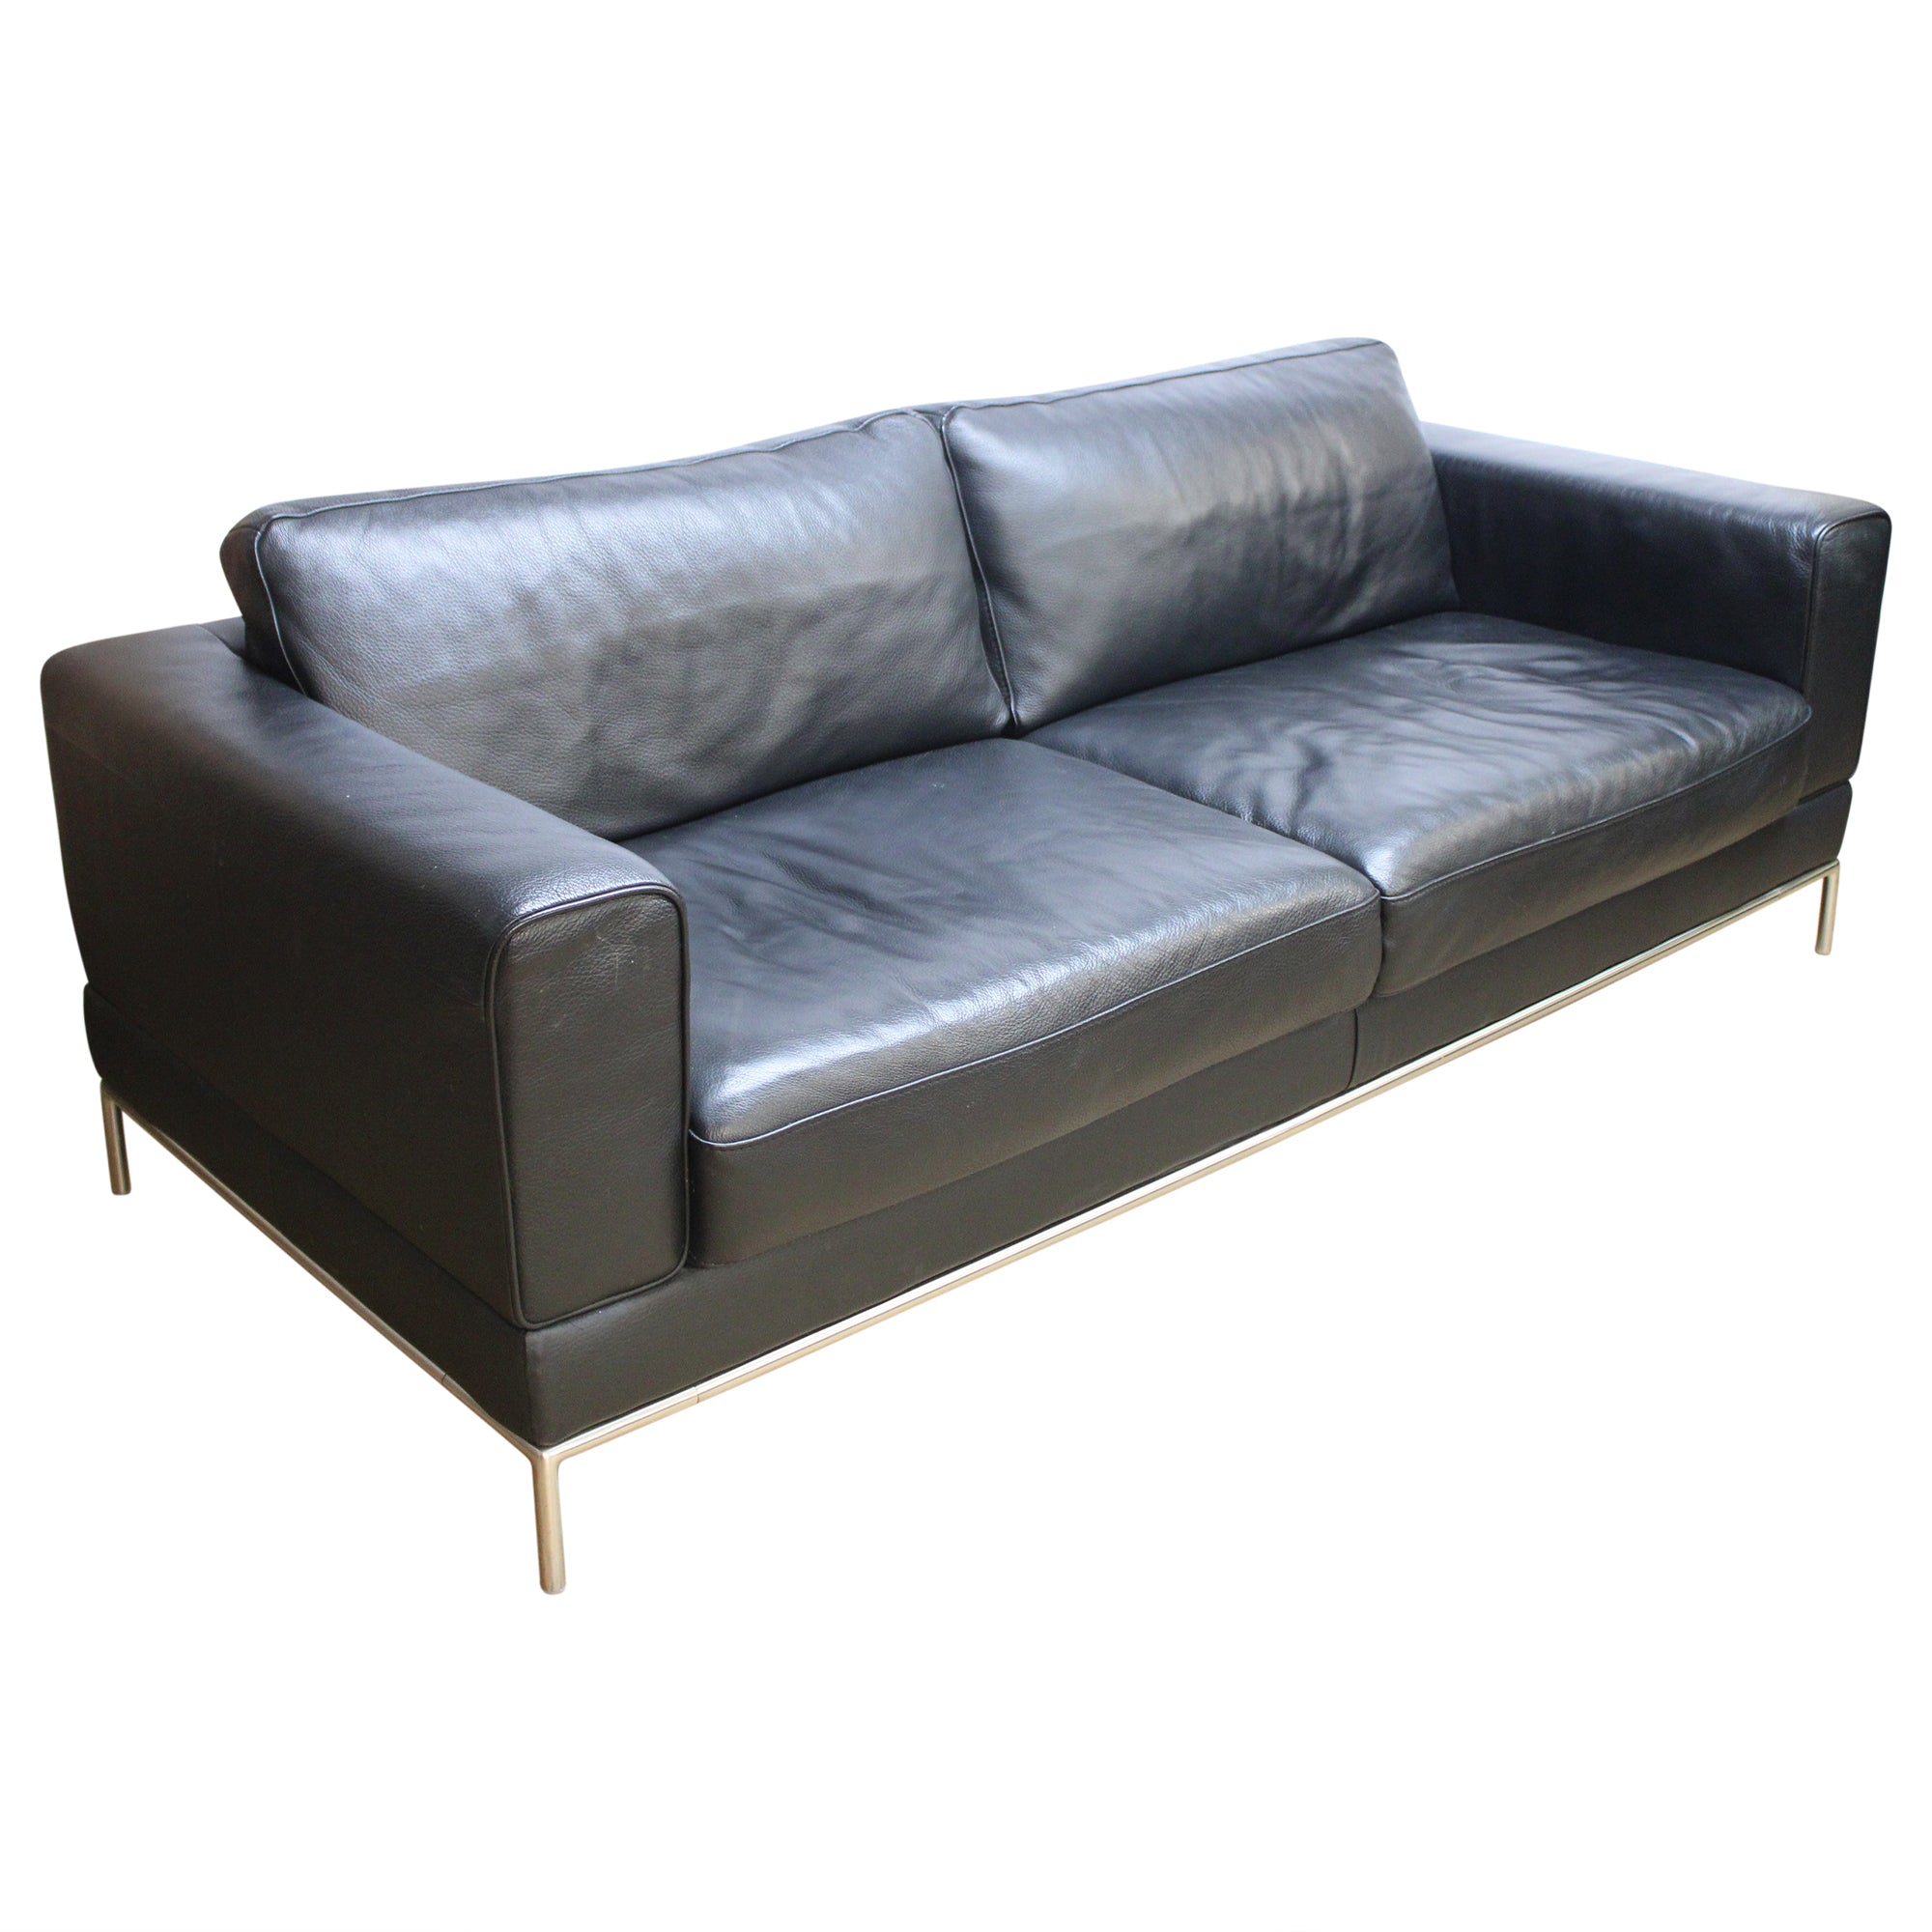 Leather Lounge Sofa, Black - Preowned